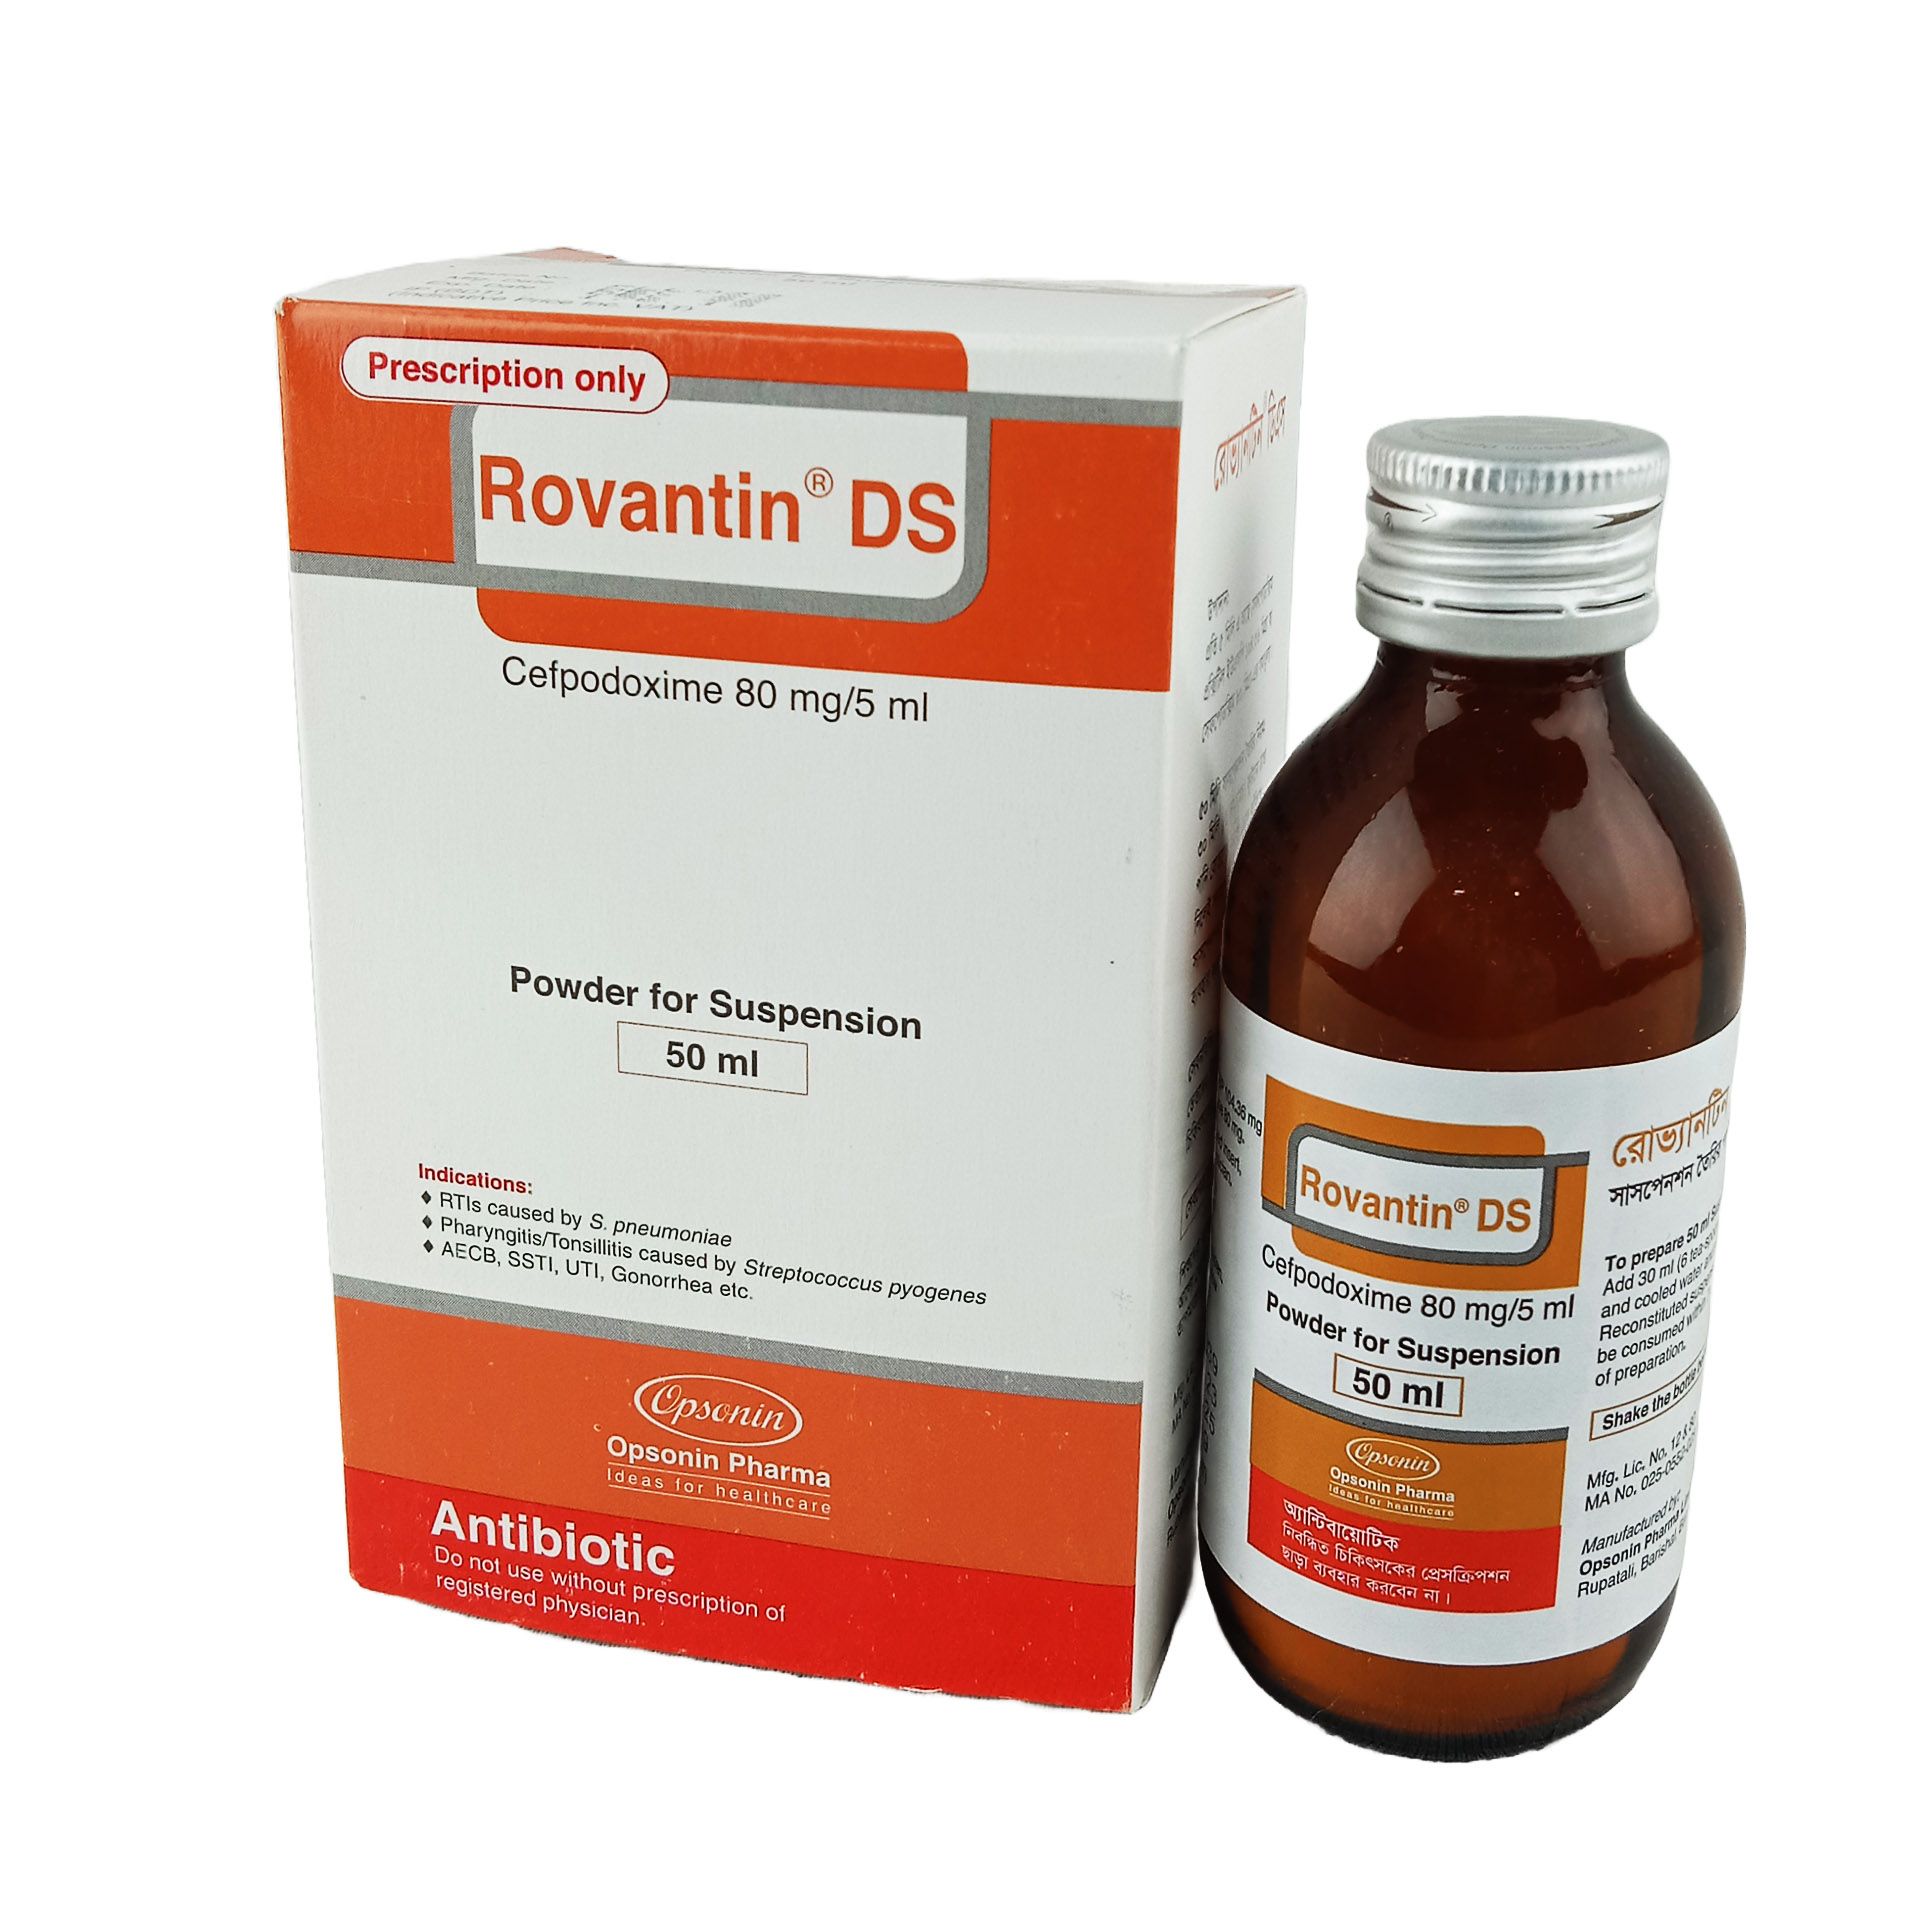 Rovantin DS 80mg/5ml Powder for Suspension